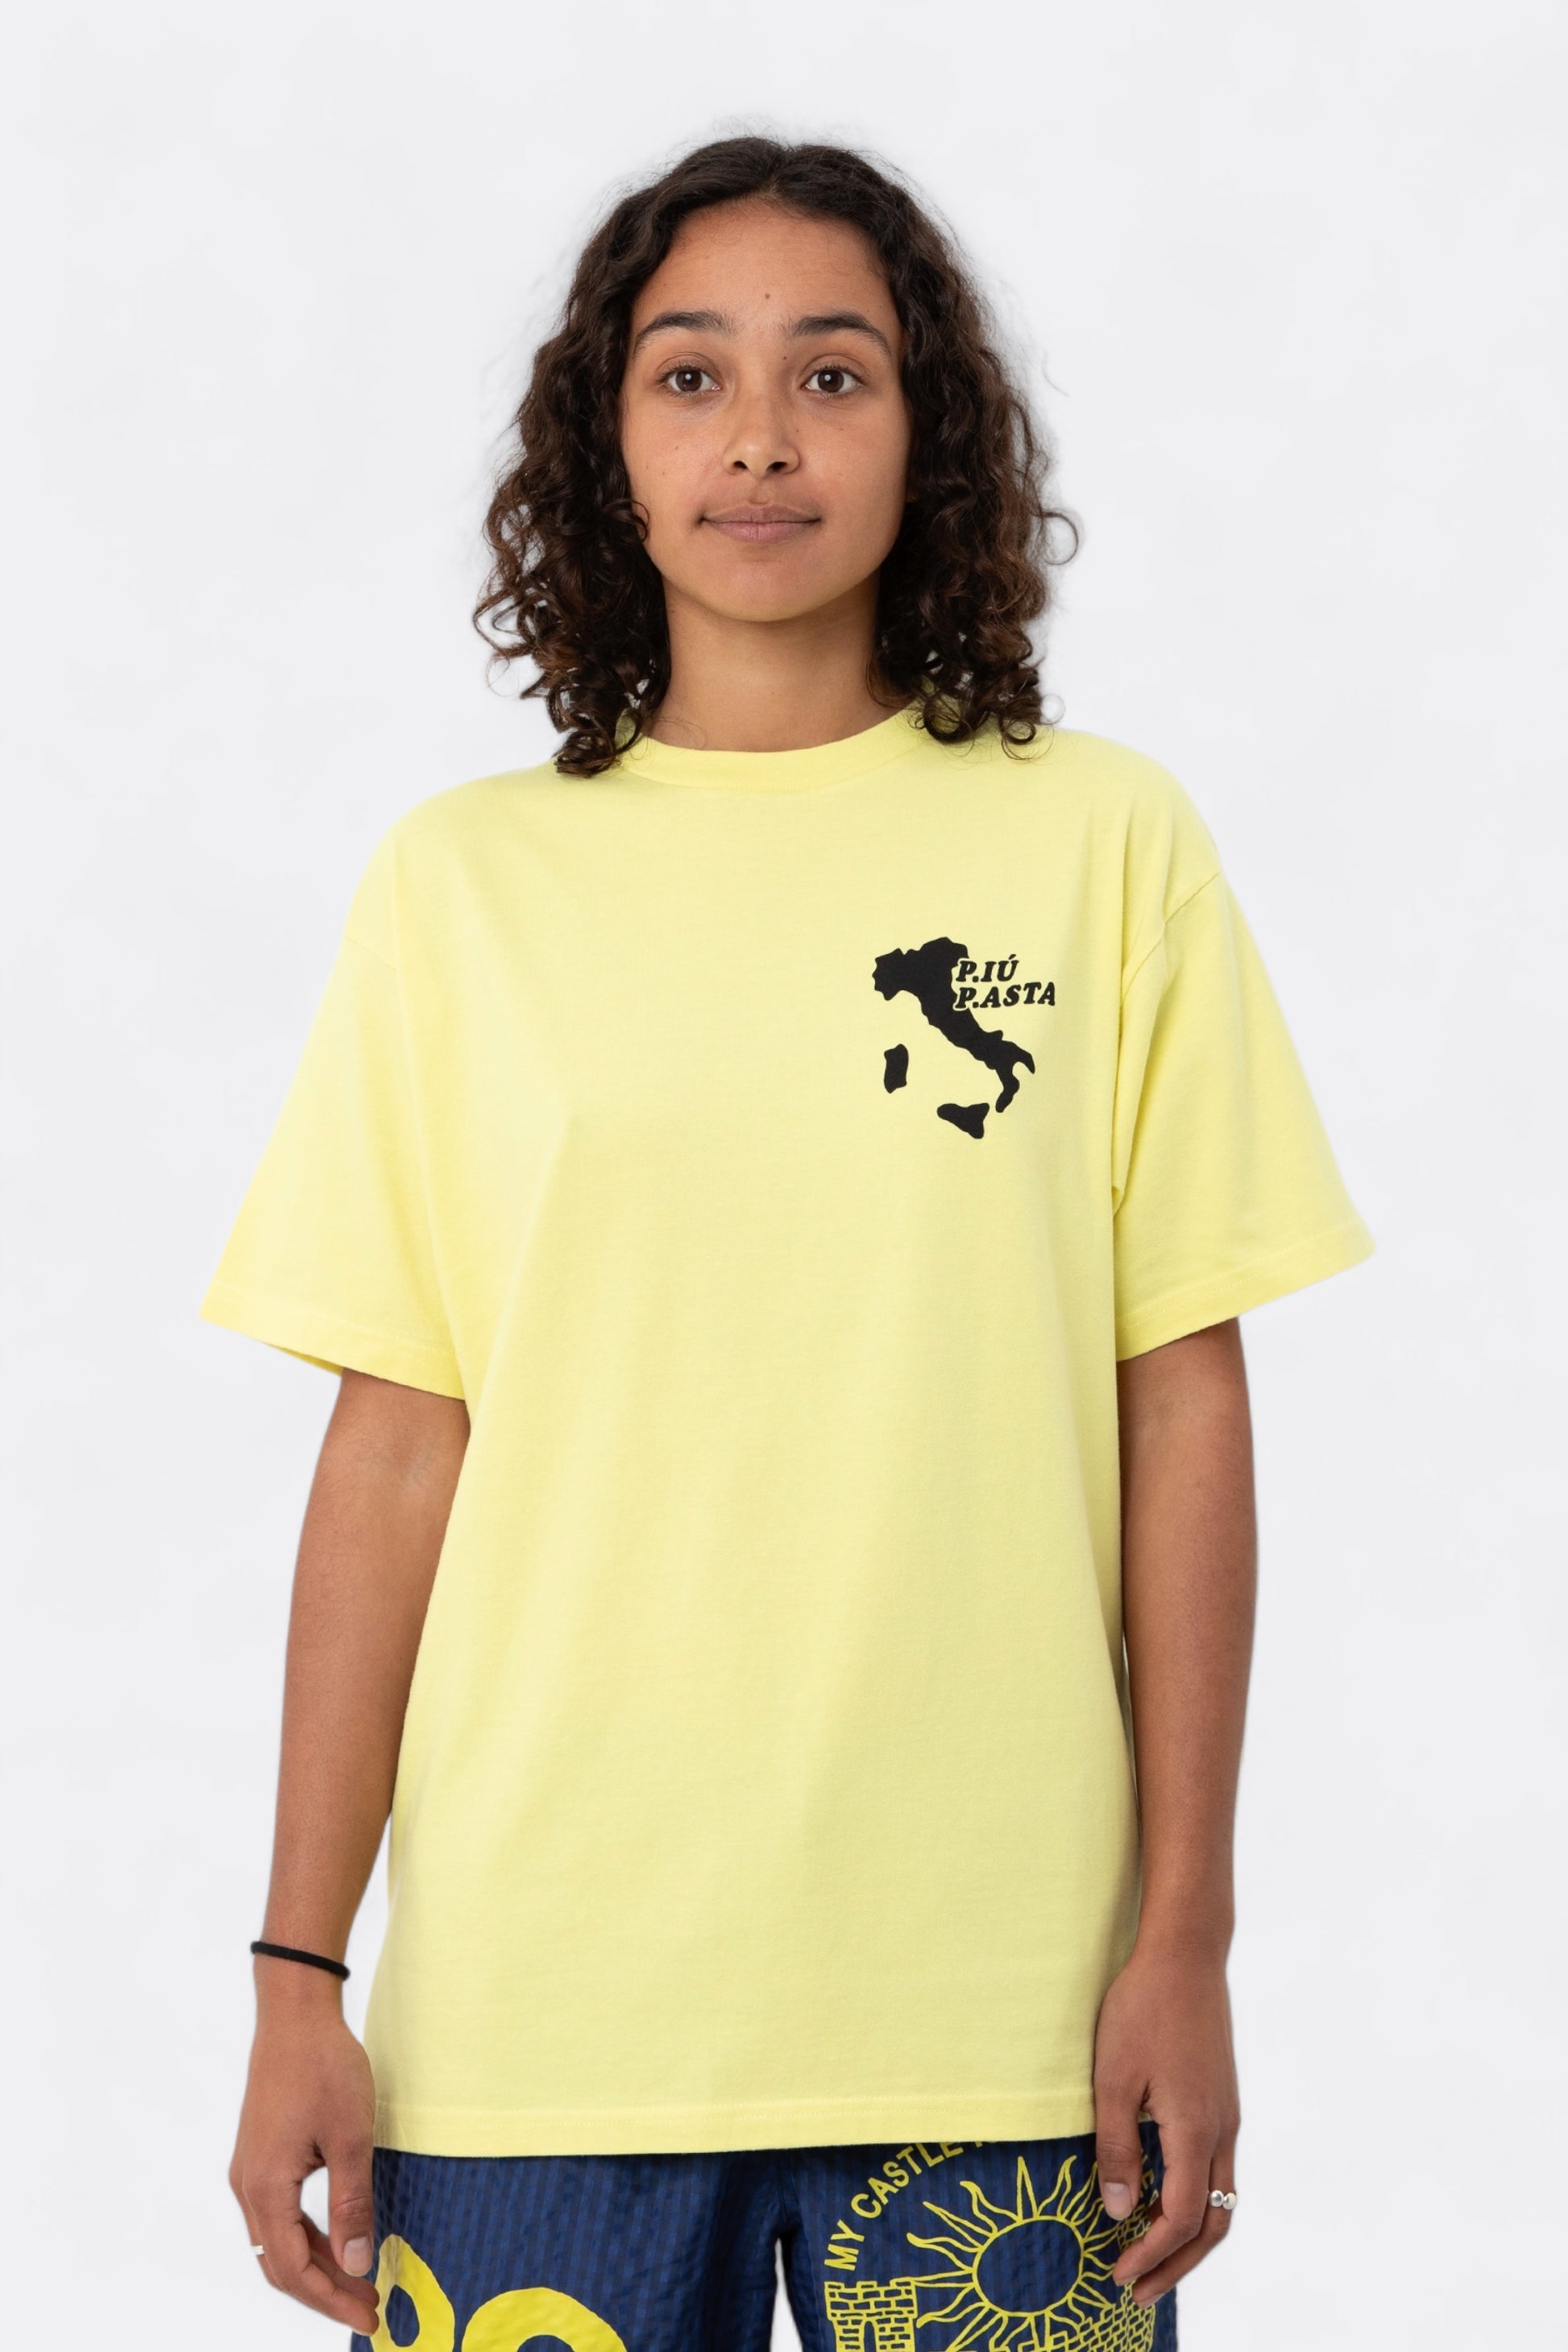 Public Possession - P.iu P.asta T-Shirt (Stonewashed Yellow)